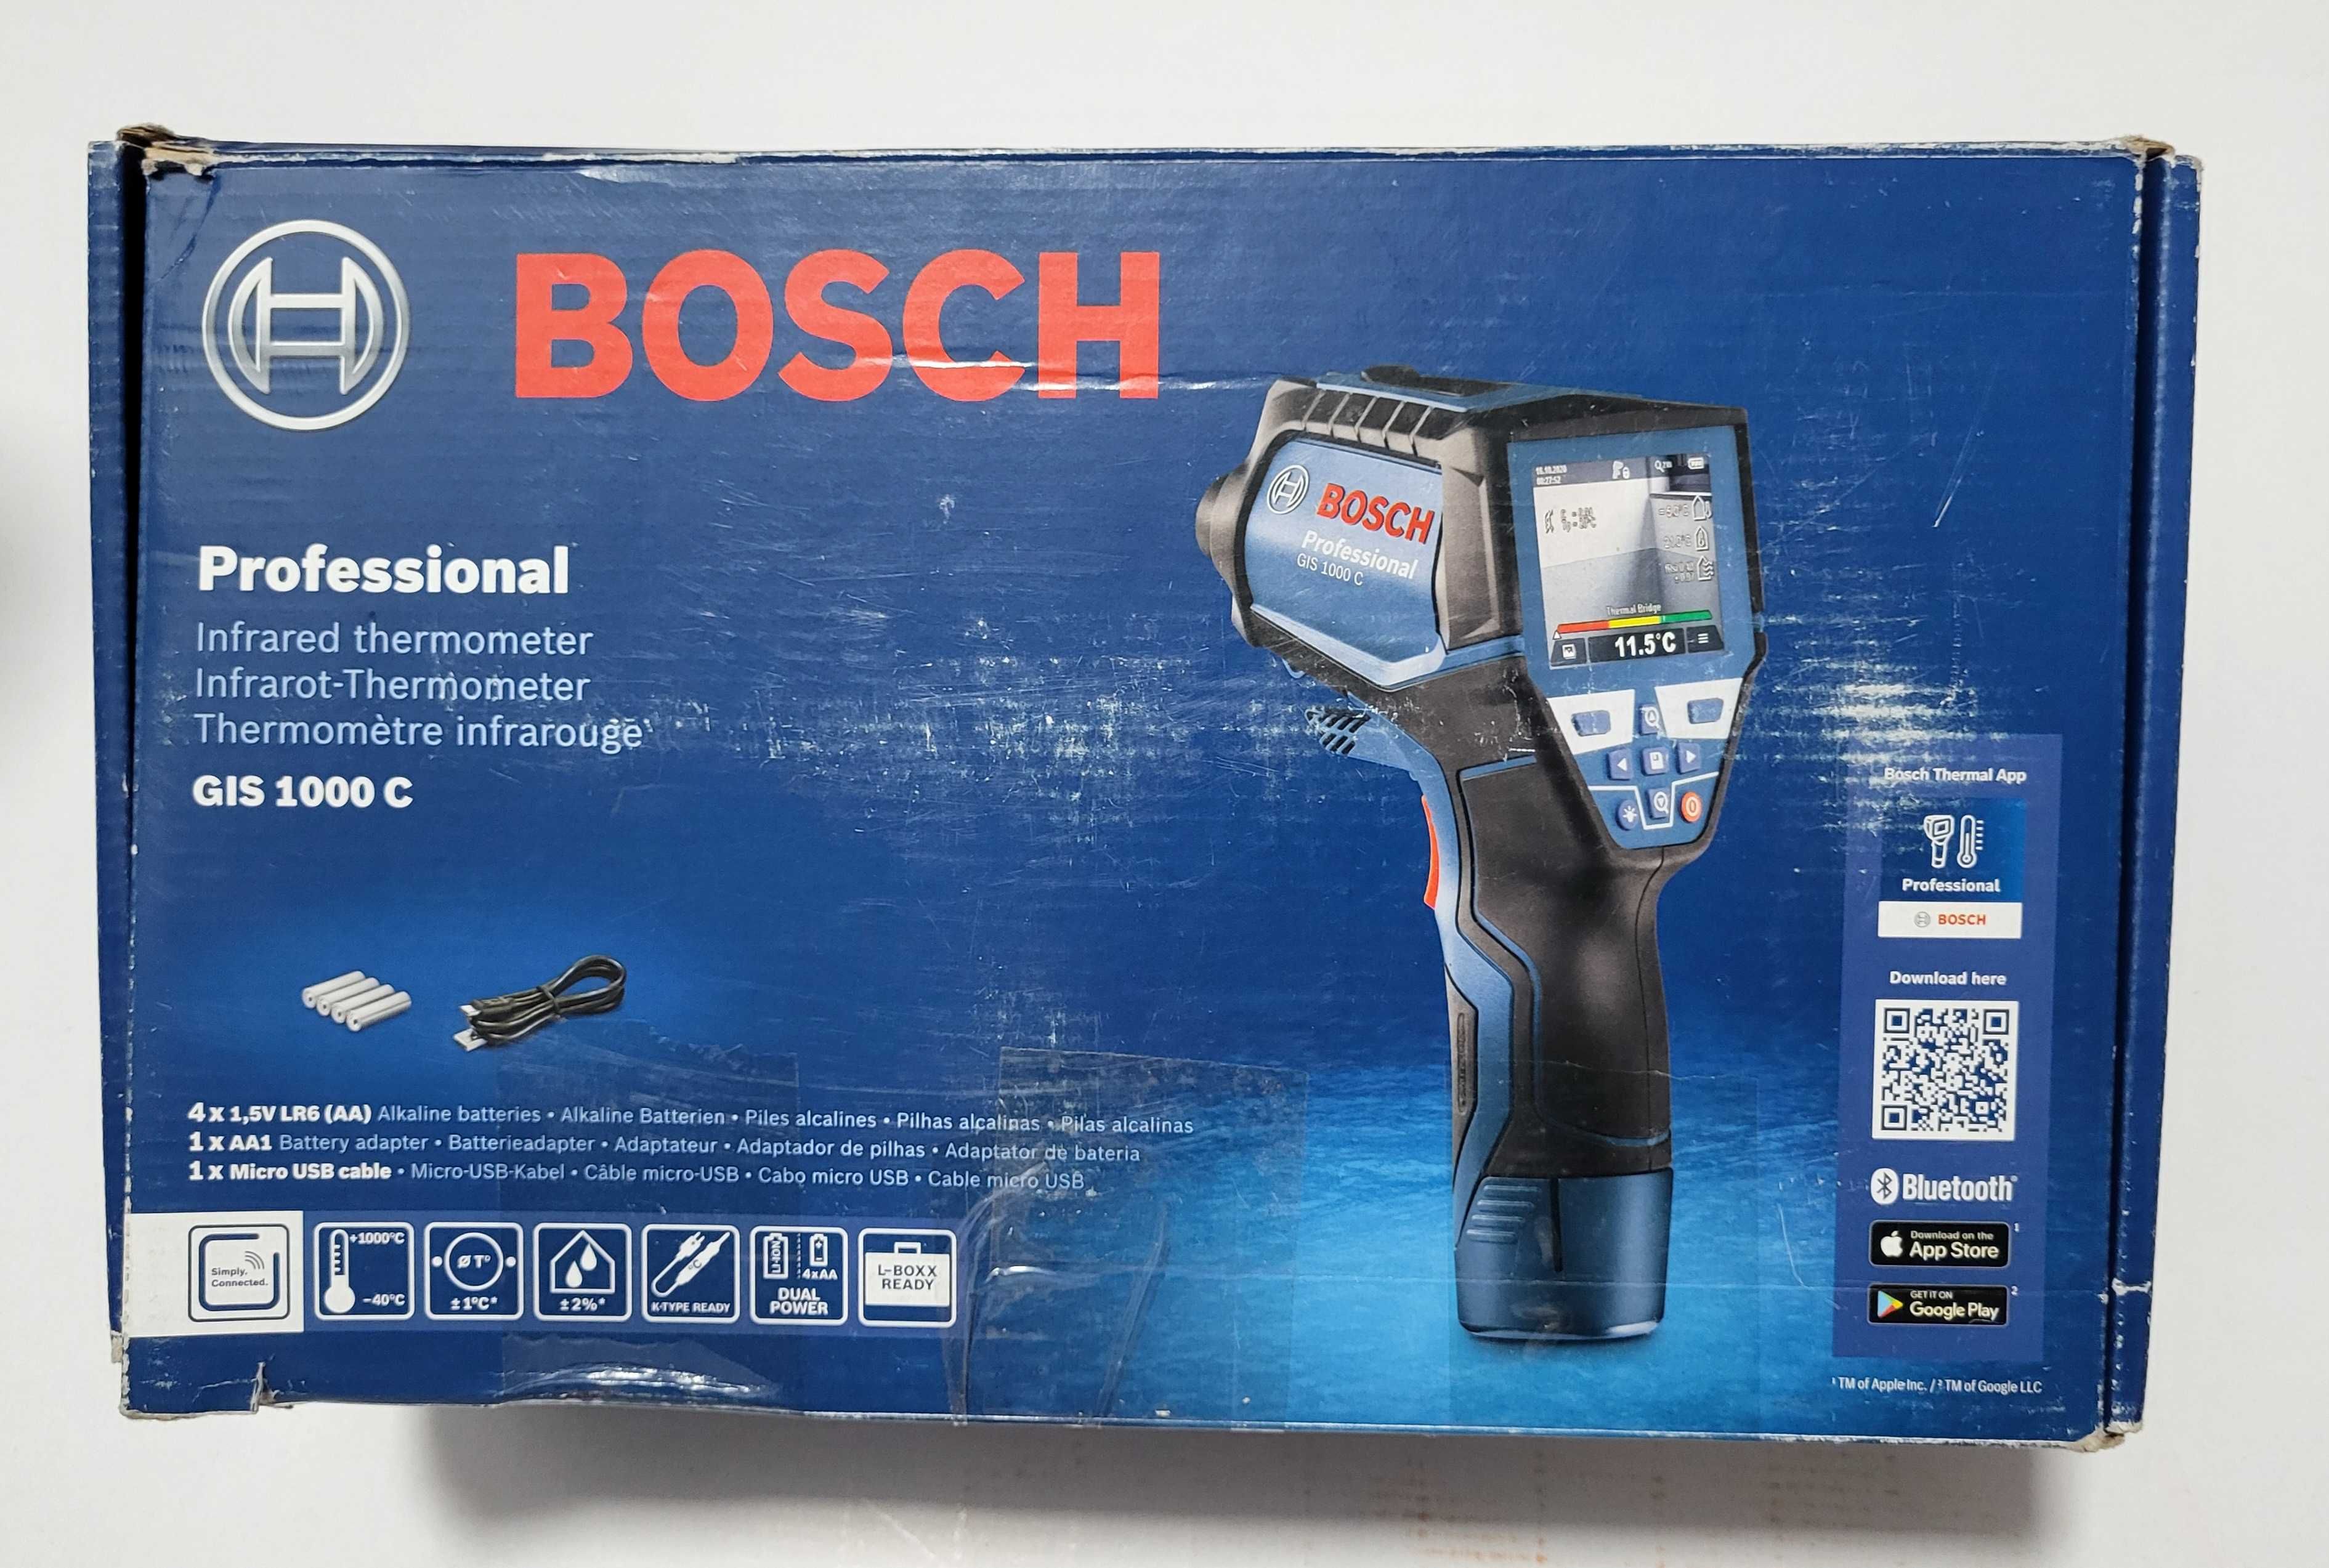 Termodetector - Bosch GIS 1000 C Professional